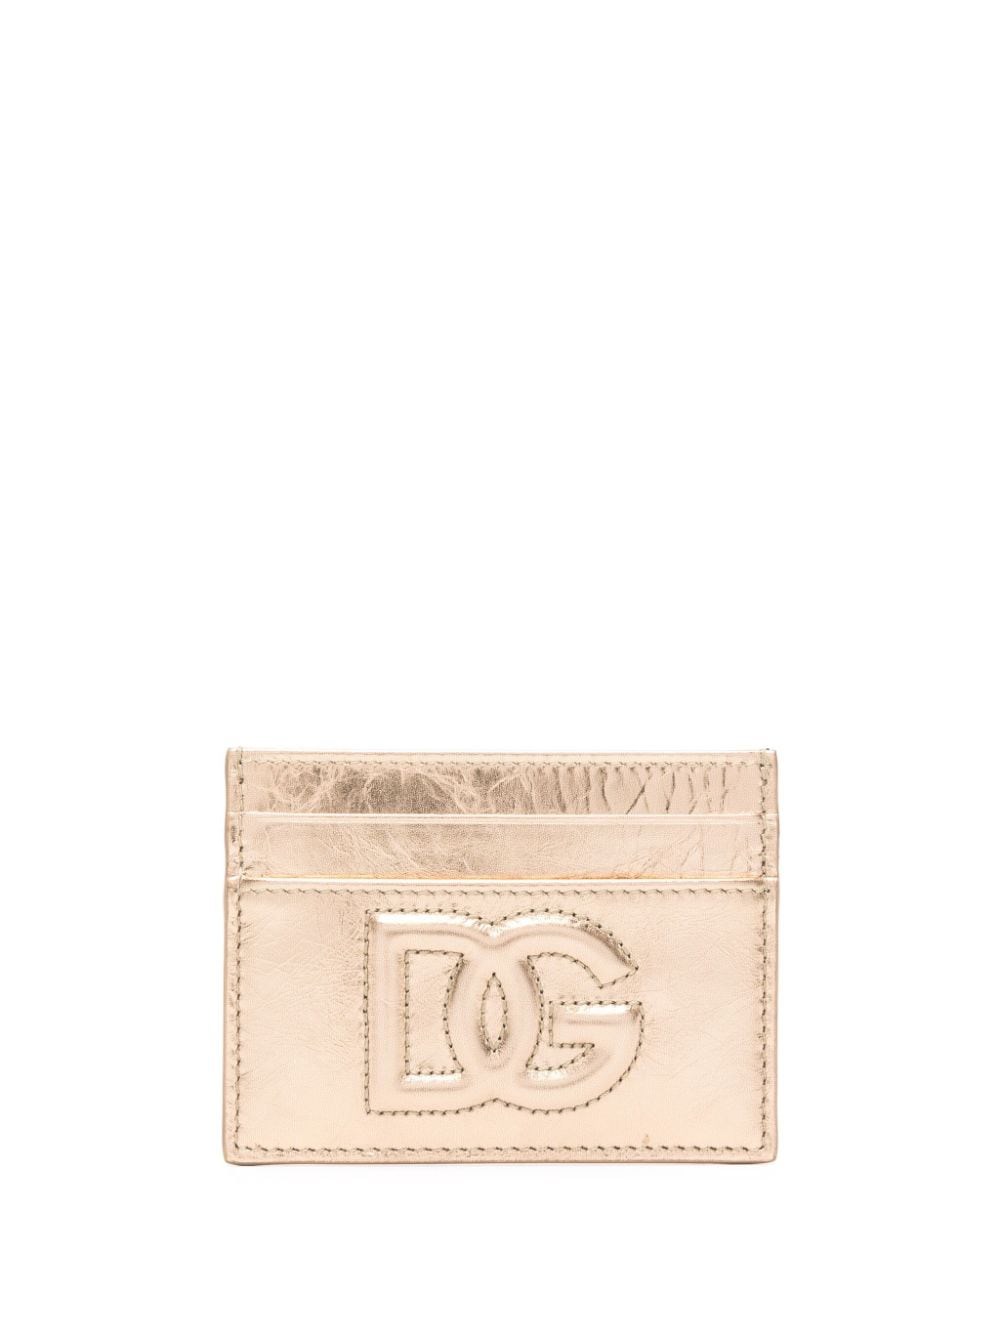 Dolce & Gabbana Wallet With Metallic Effect